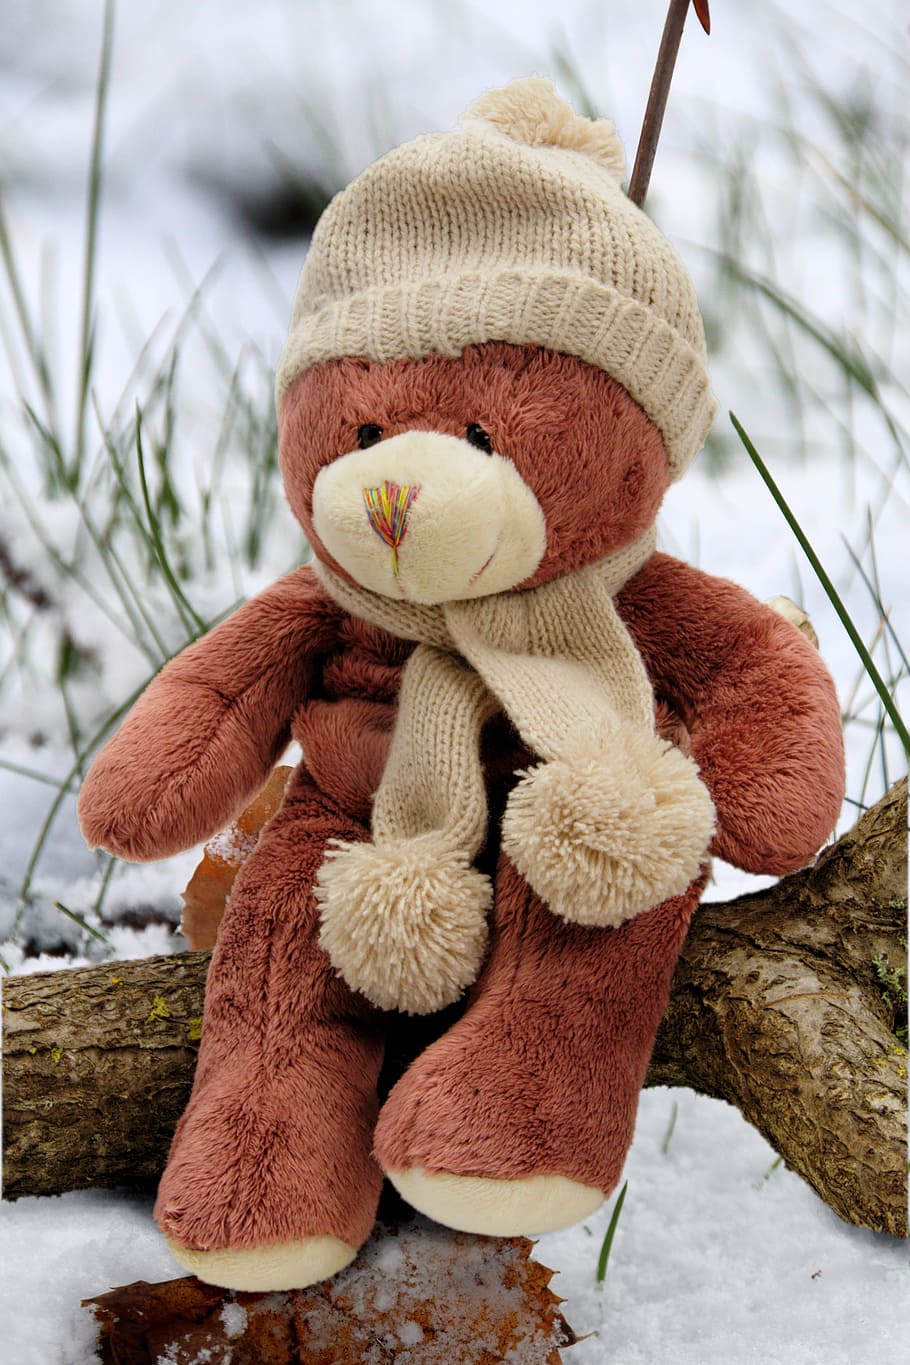 brown, bear, plush, toy, tree branch, bears, teddy, teddy bear, stuffed animal, winter